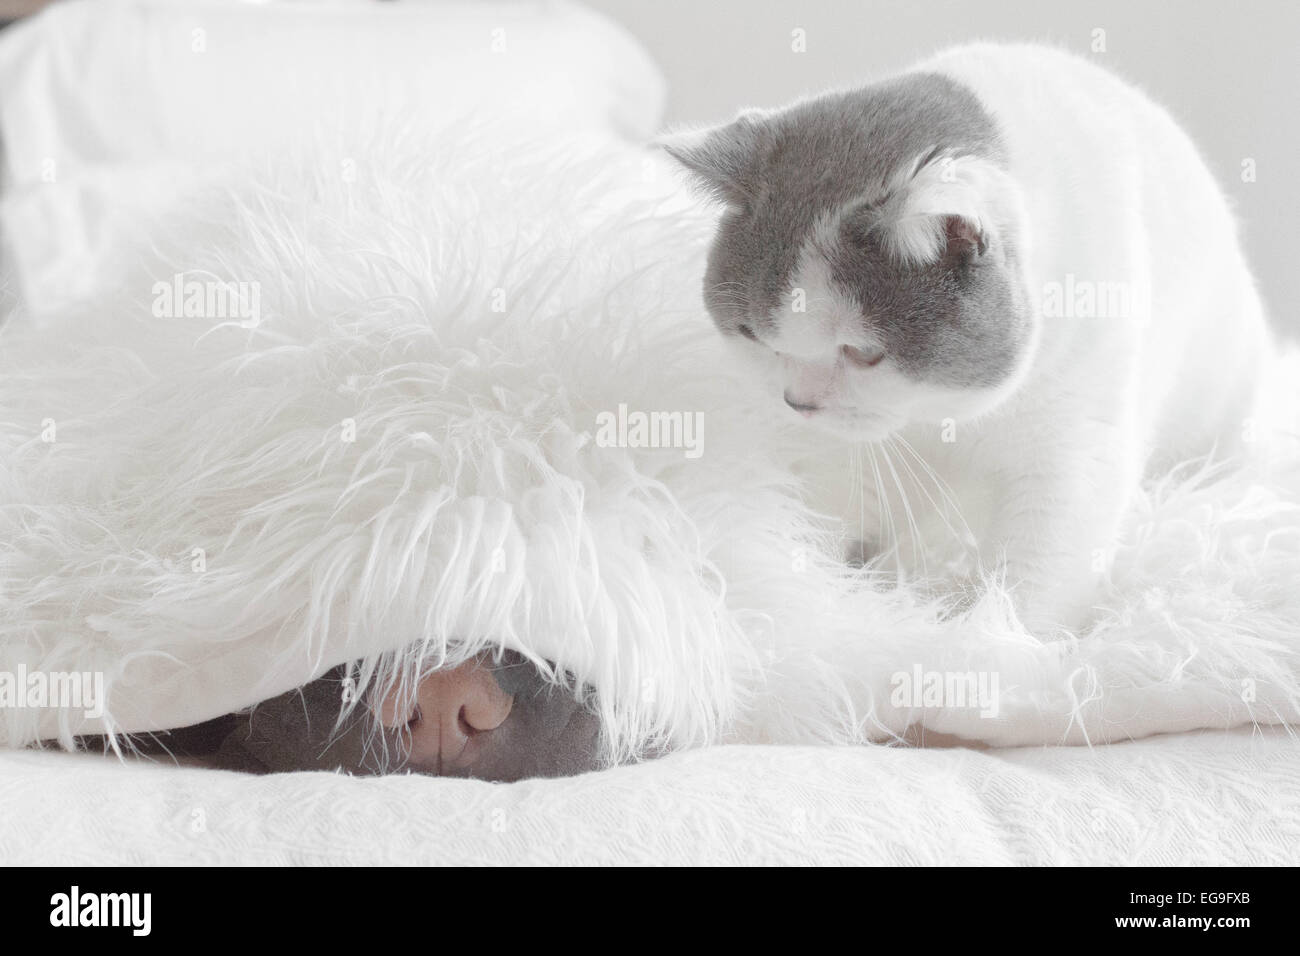 British shorthair cat looking at a Shar pei dog sleeping under a fluffy blanket Stock Photo